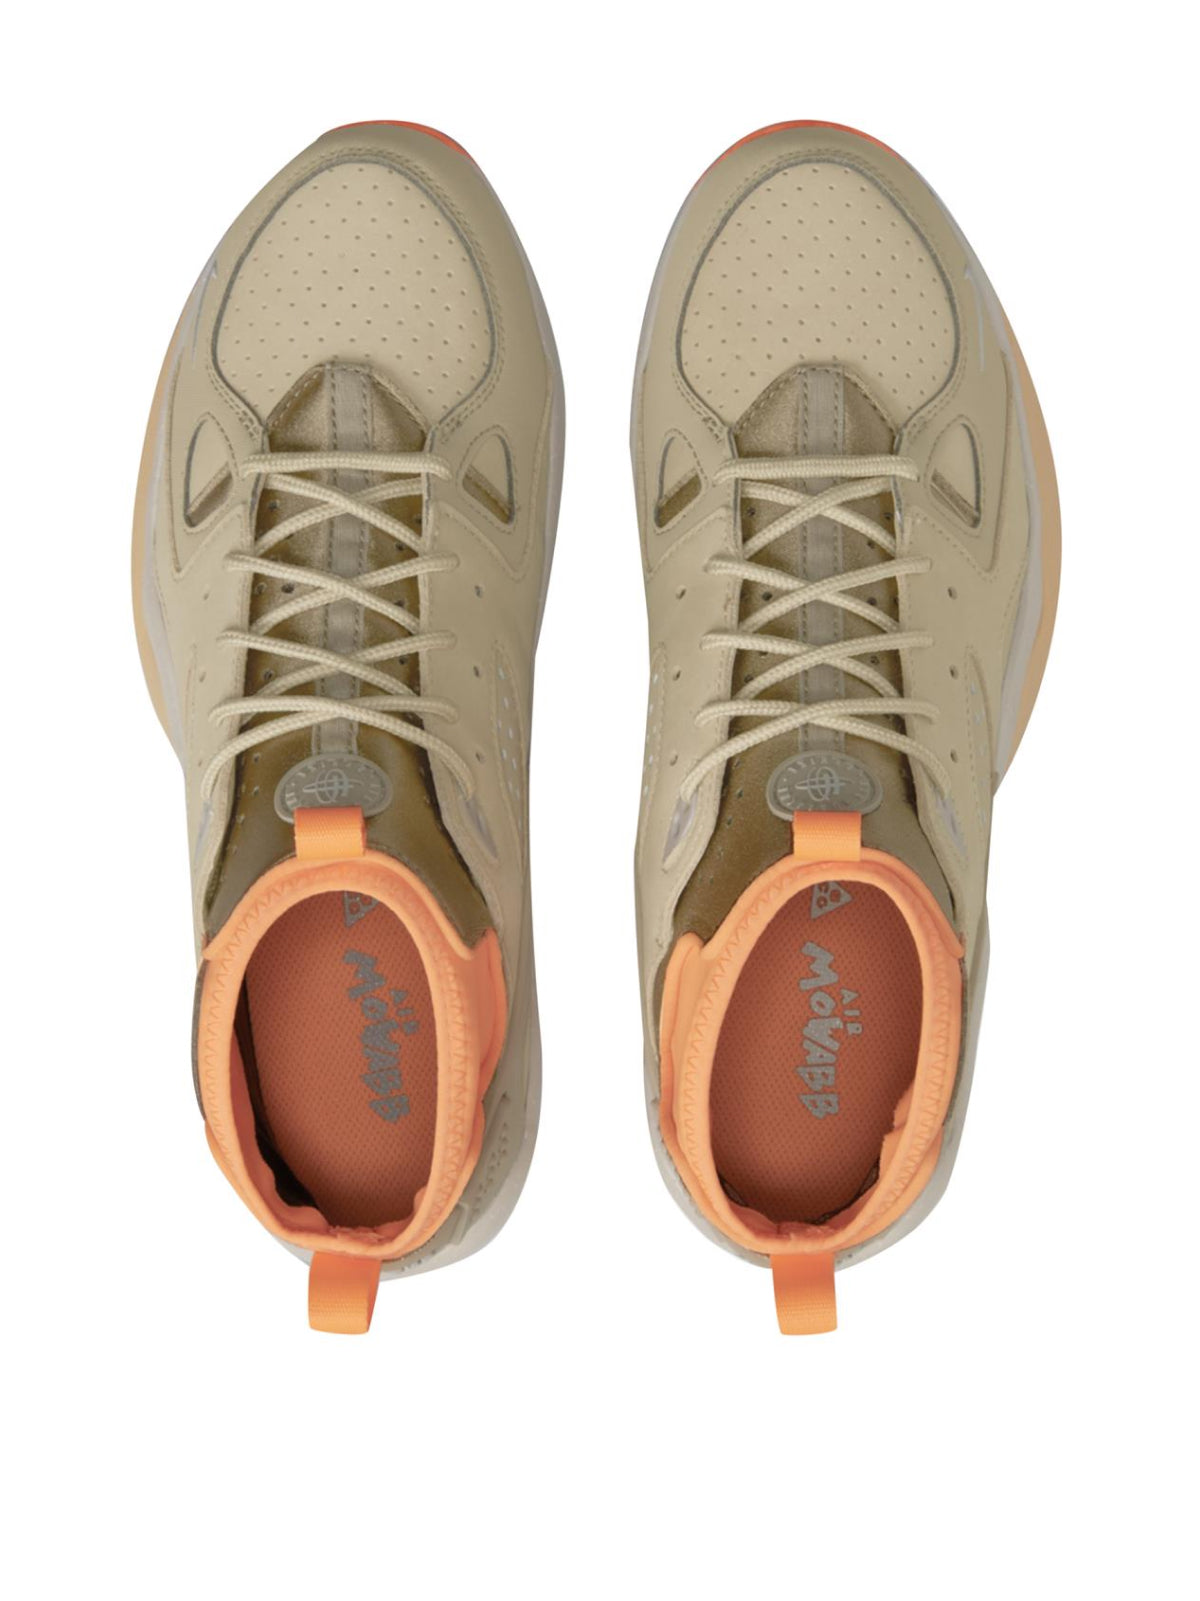 Nike-OUTLET-SALE-ACG Air Mowabb Limestone Sneakers-ARCHIVIST